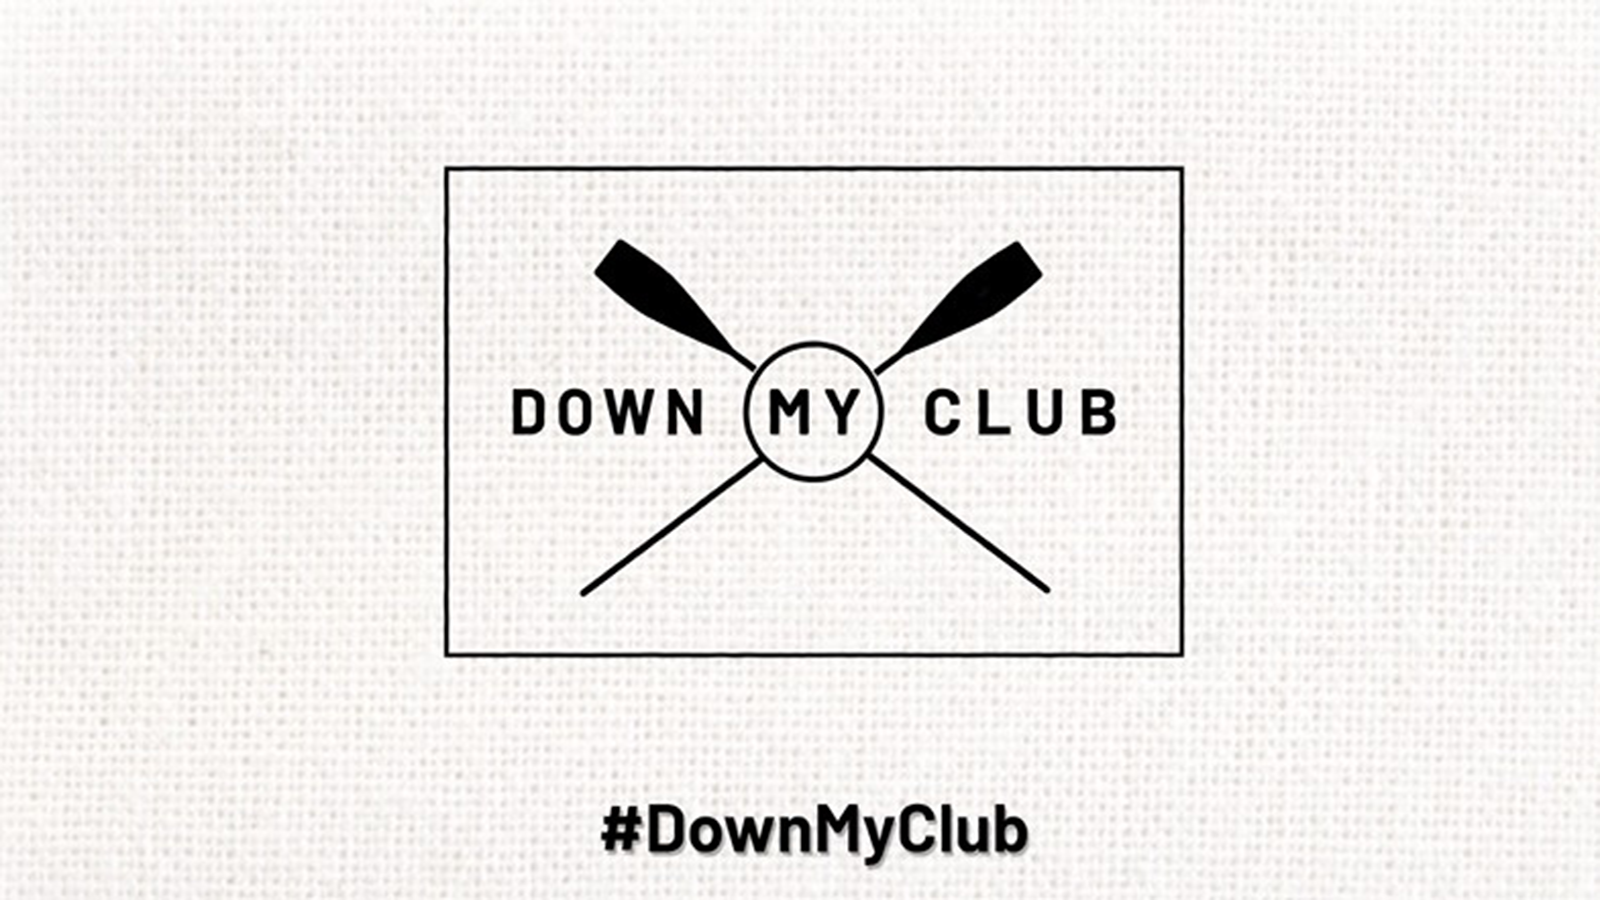 Down My Club crossed oars logo